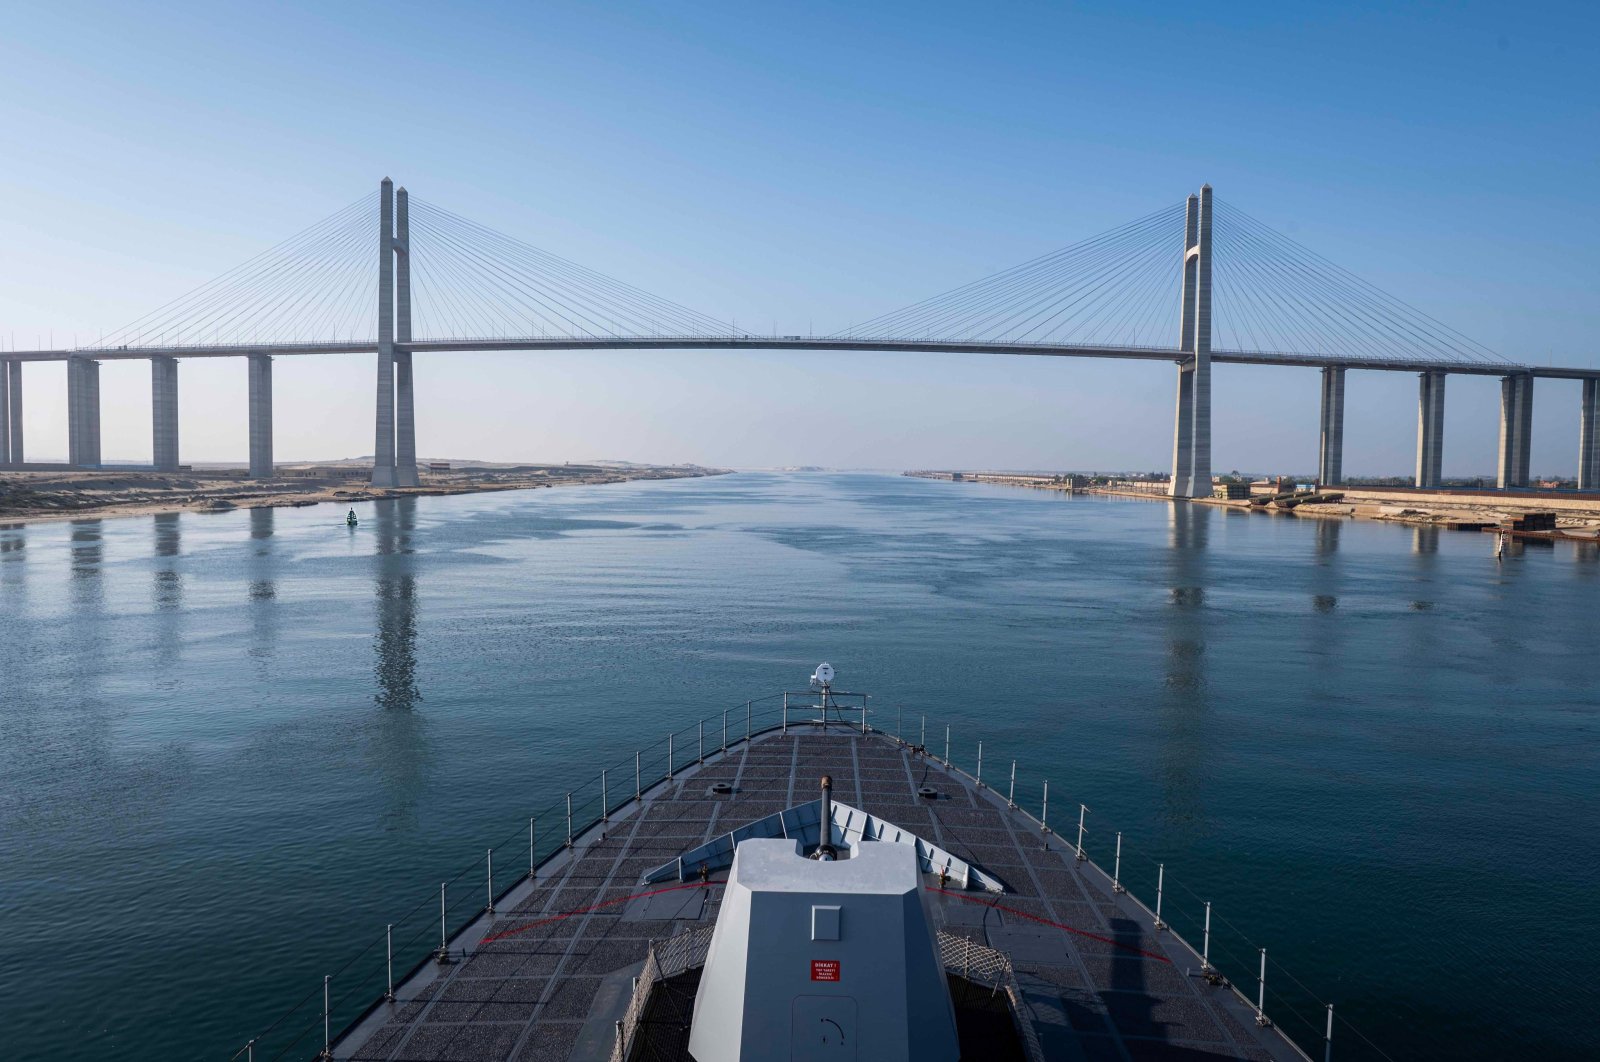 Japan-bound Turkish warship TCG Kınalıada reaches Suez Canal